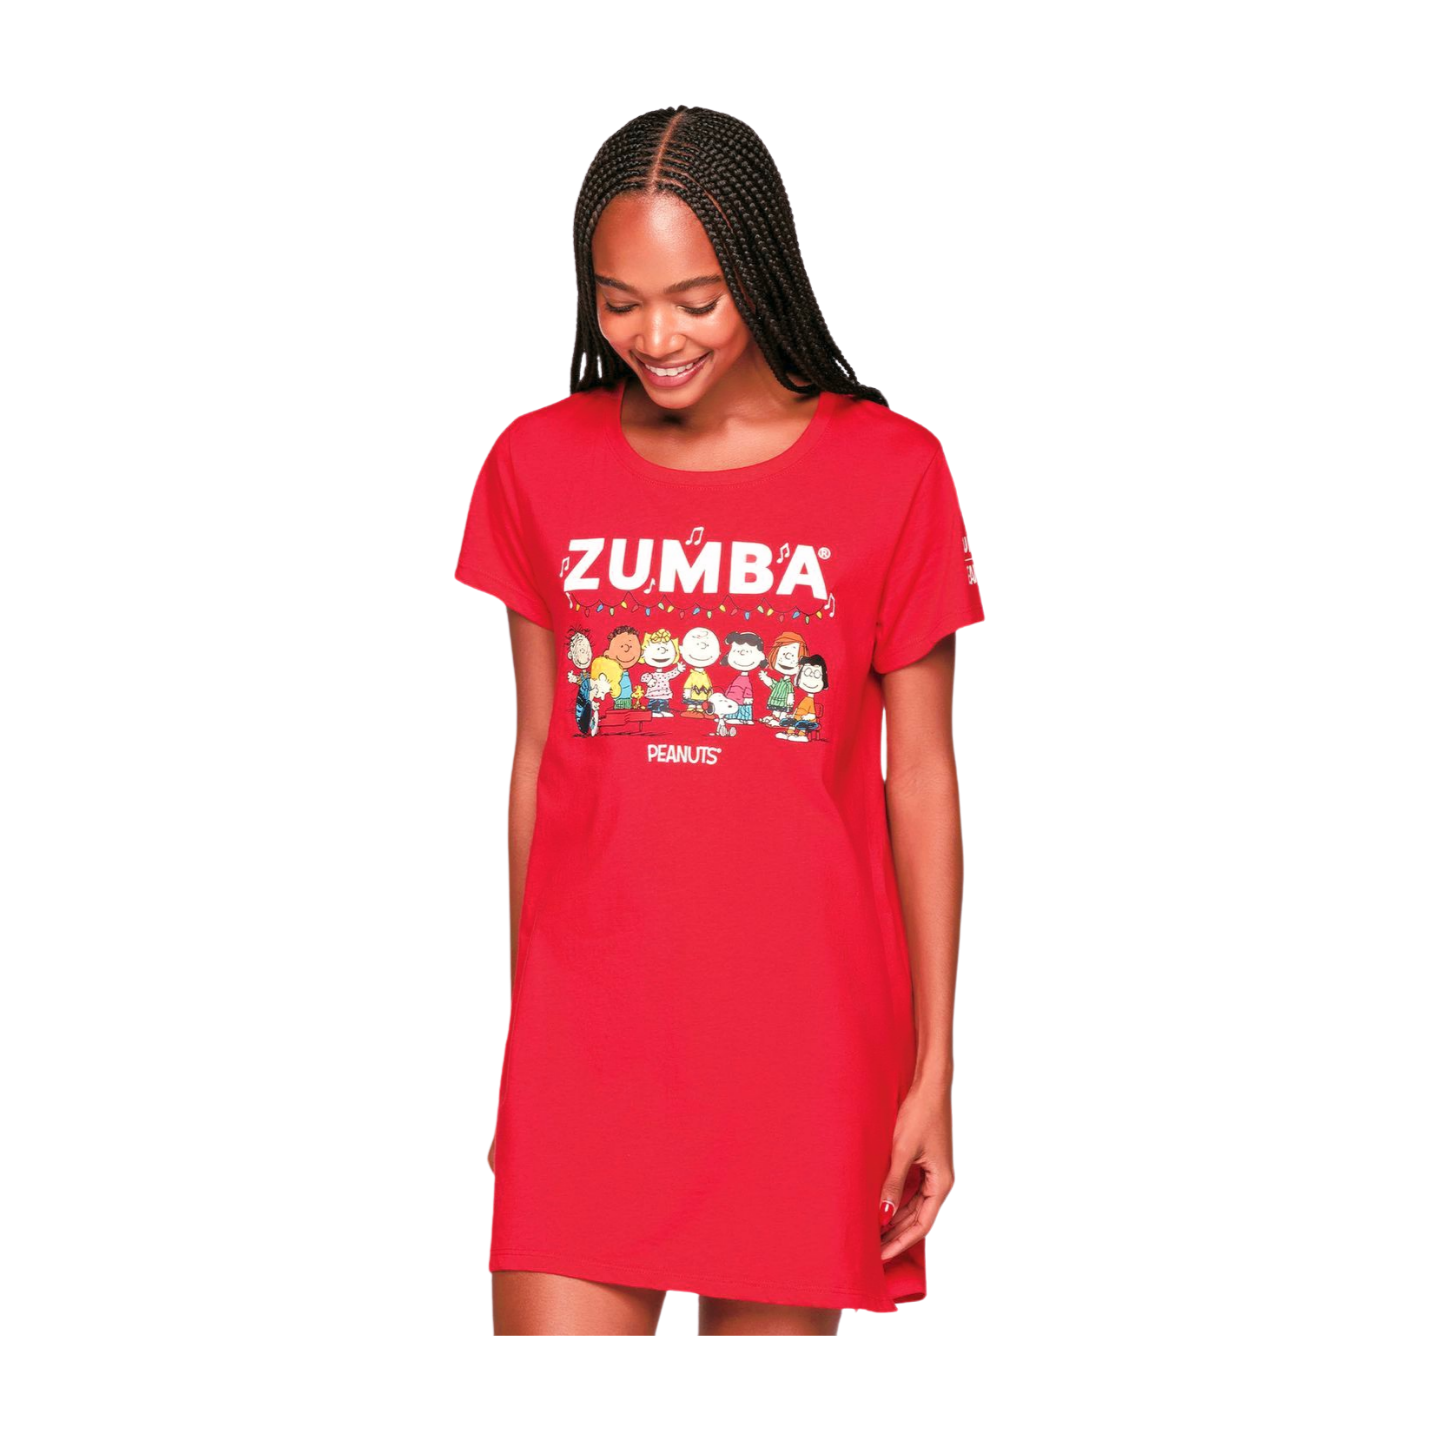 Zumba X Peanuts Sleep Shirt (Special Order)